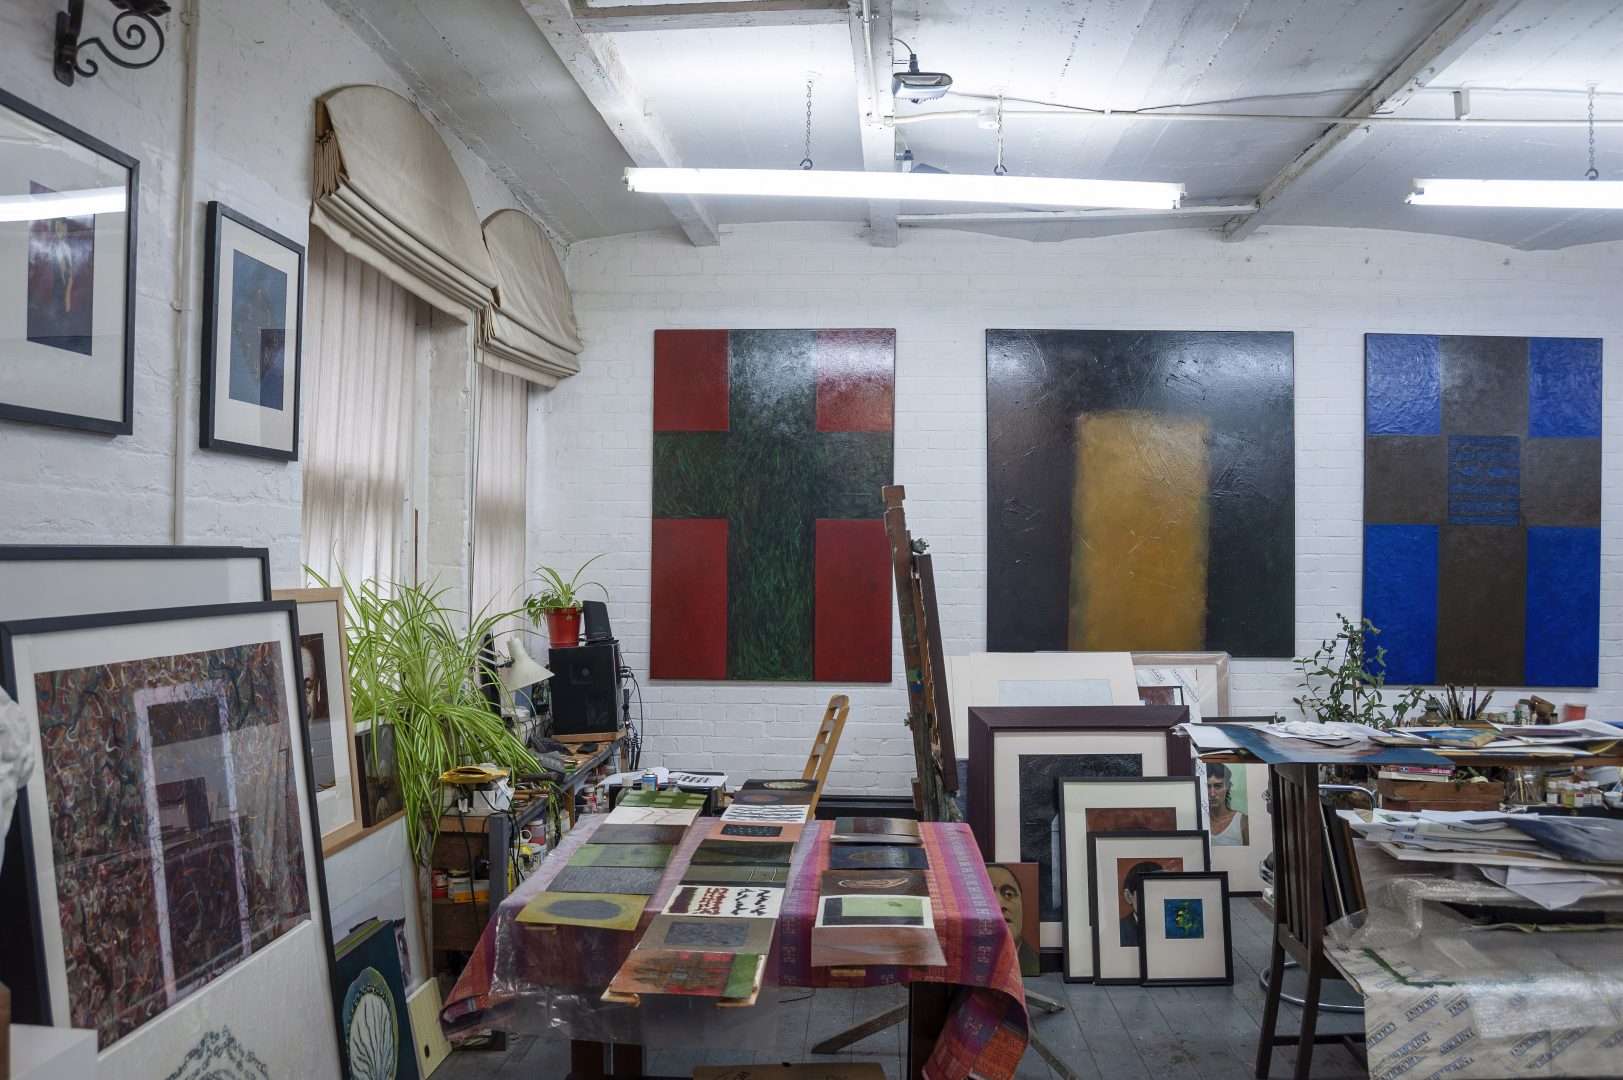 Artist Herve Constant studios, 10 Martello Street, London E8 3PE